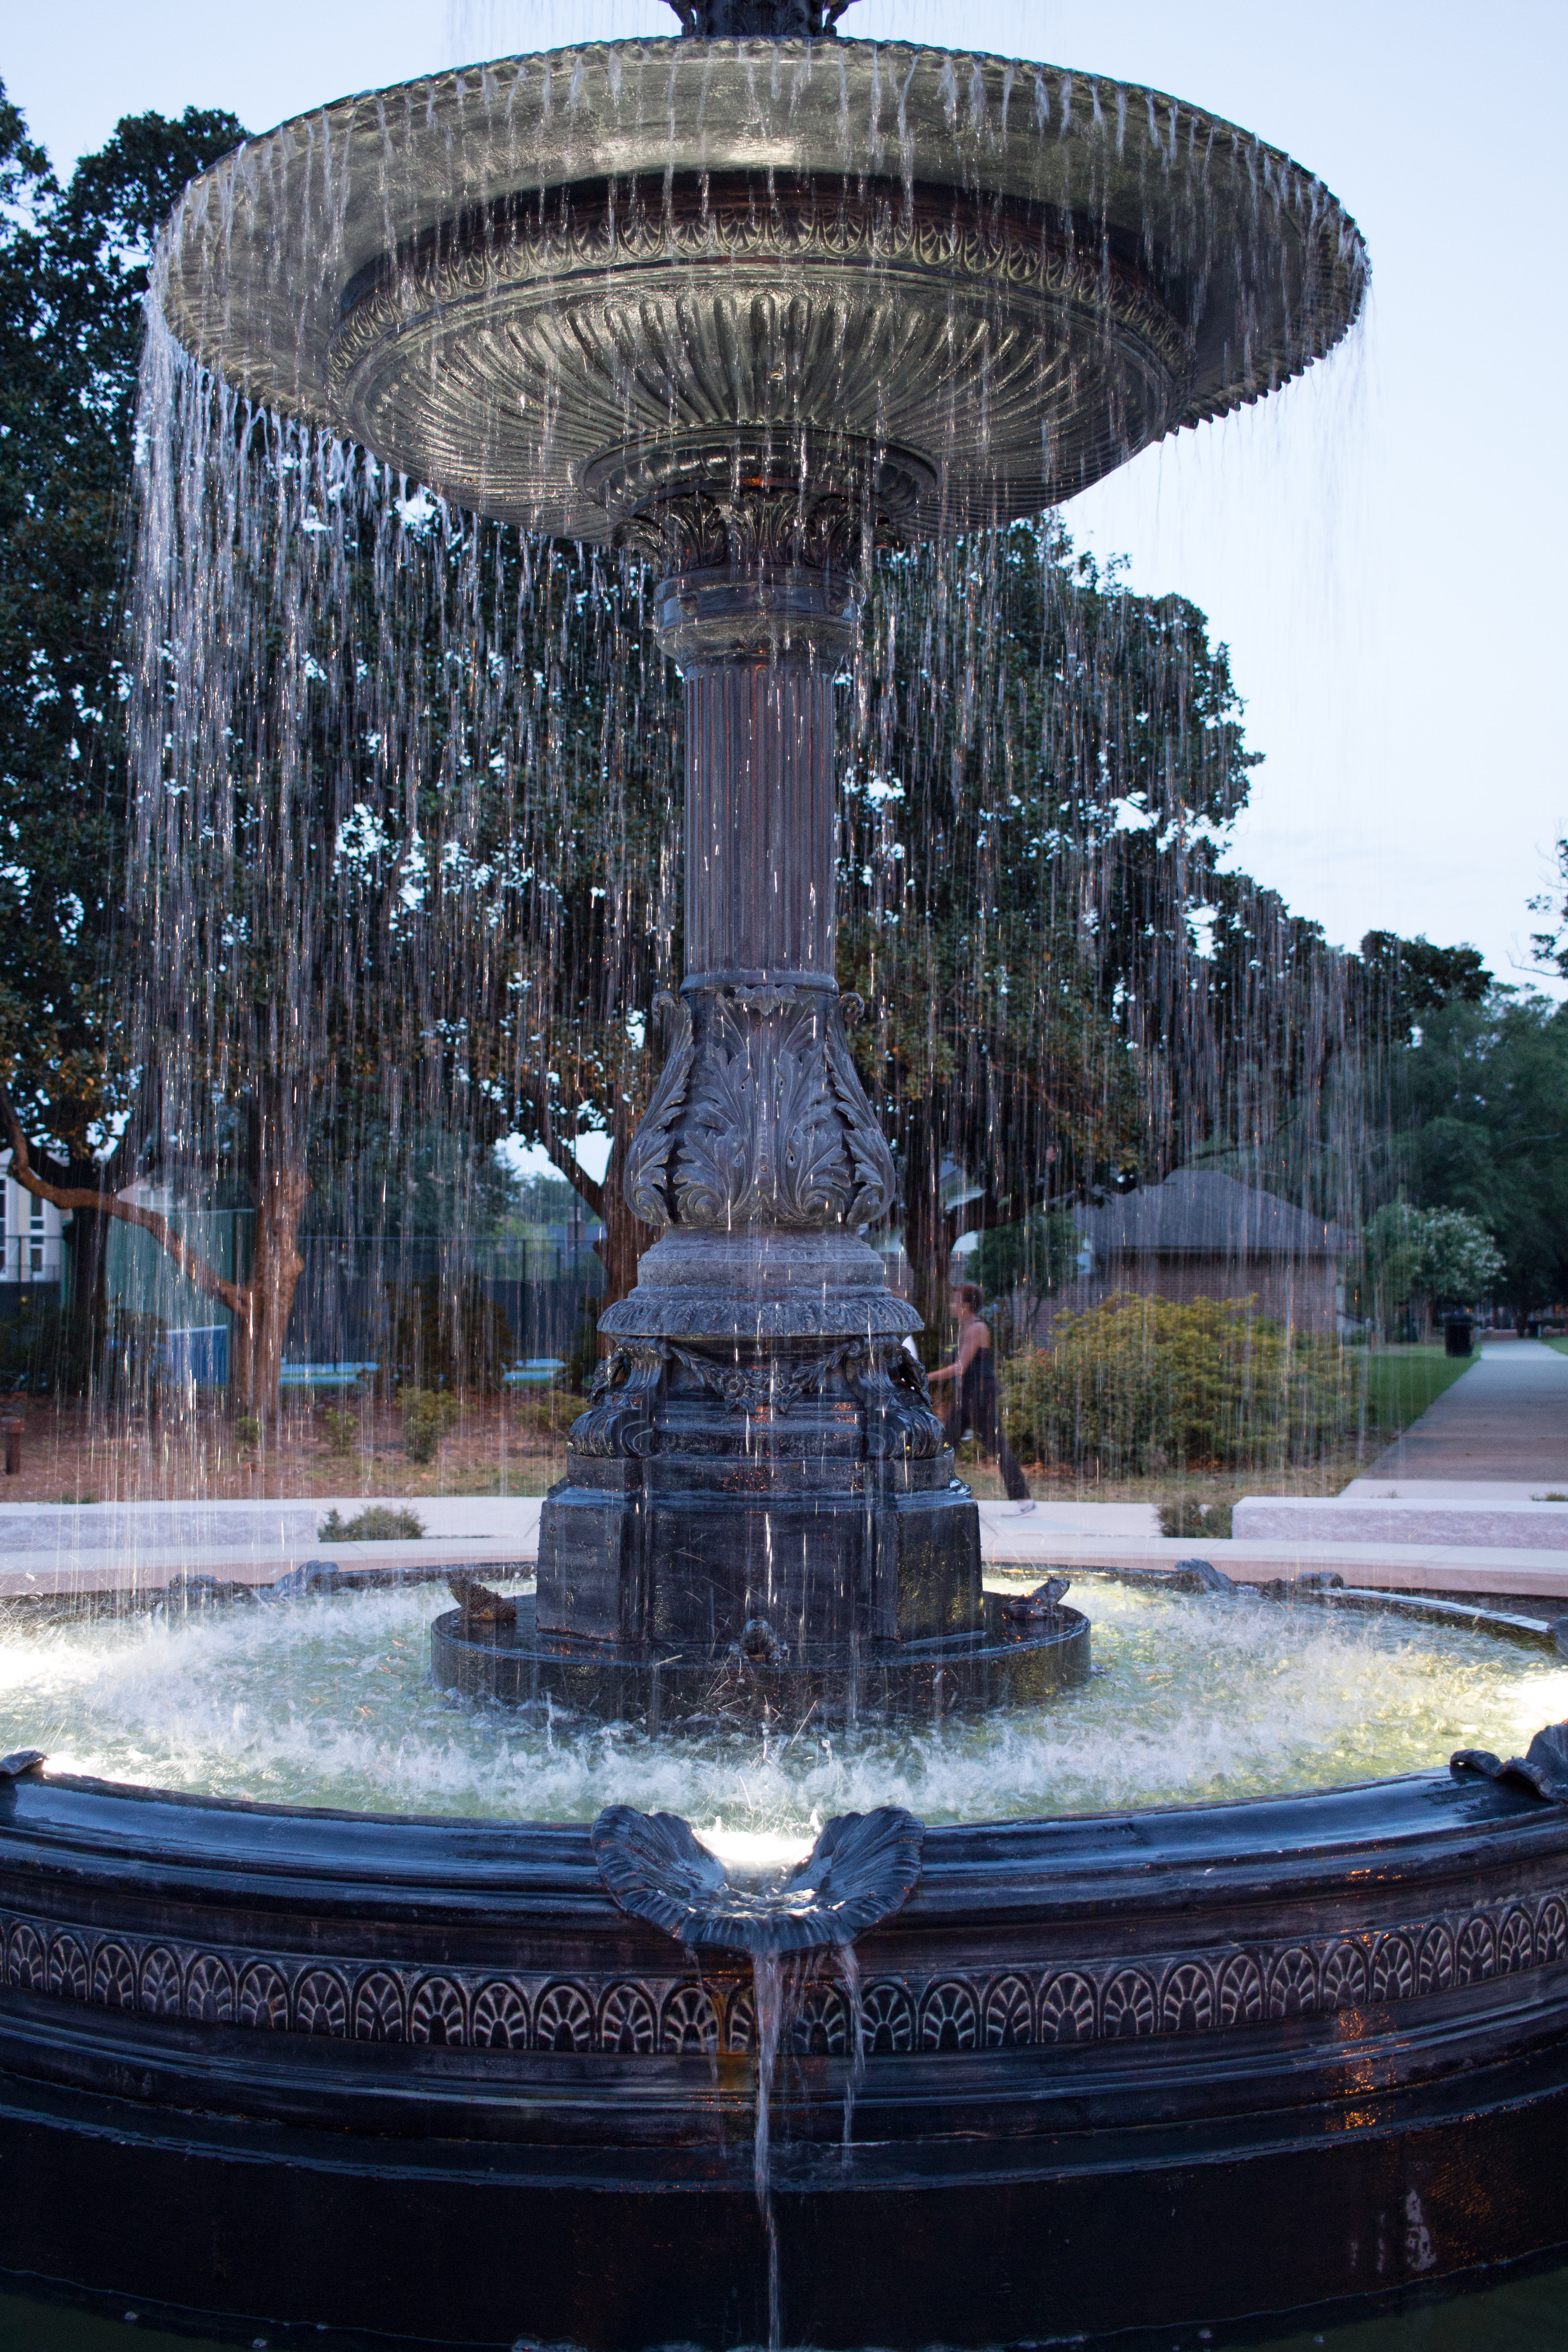 Tattnall Square Park Fountain